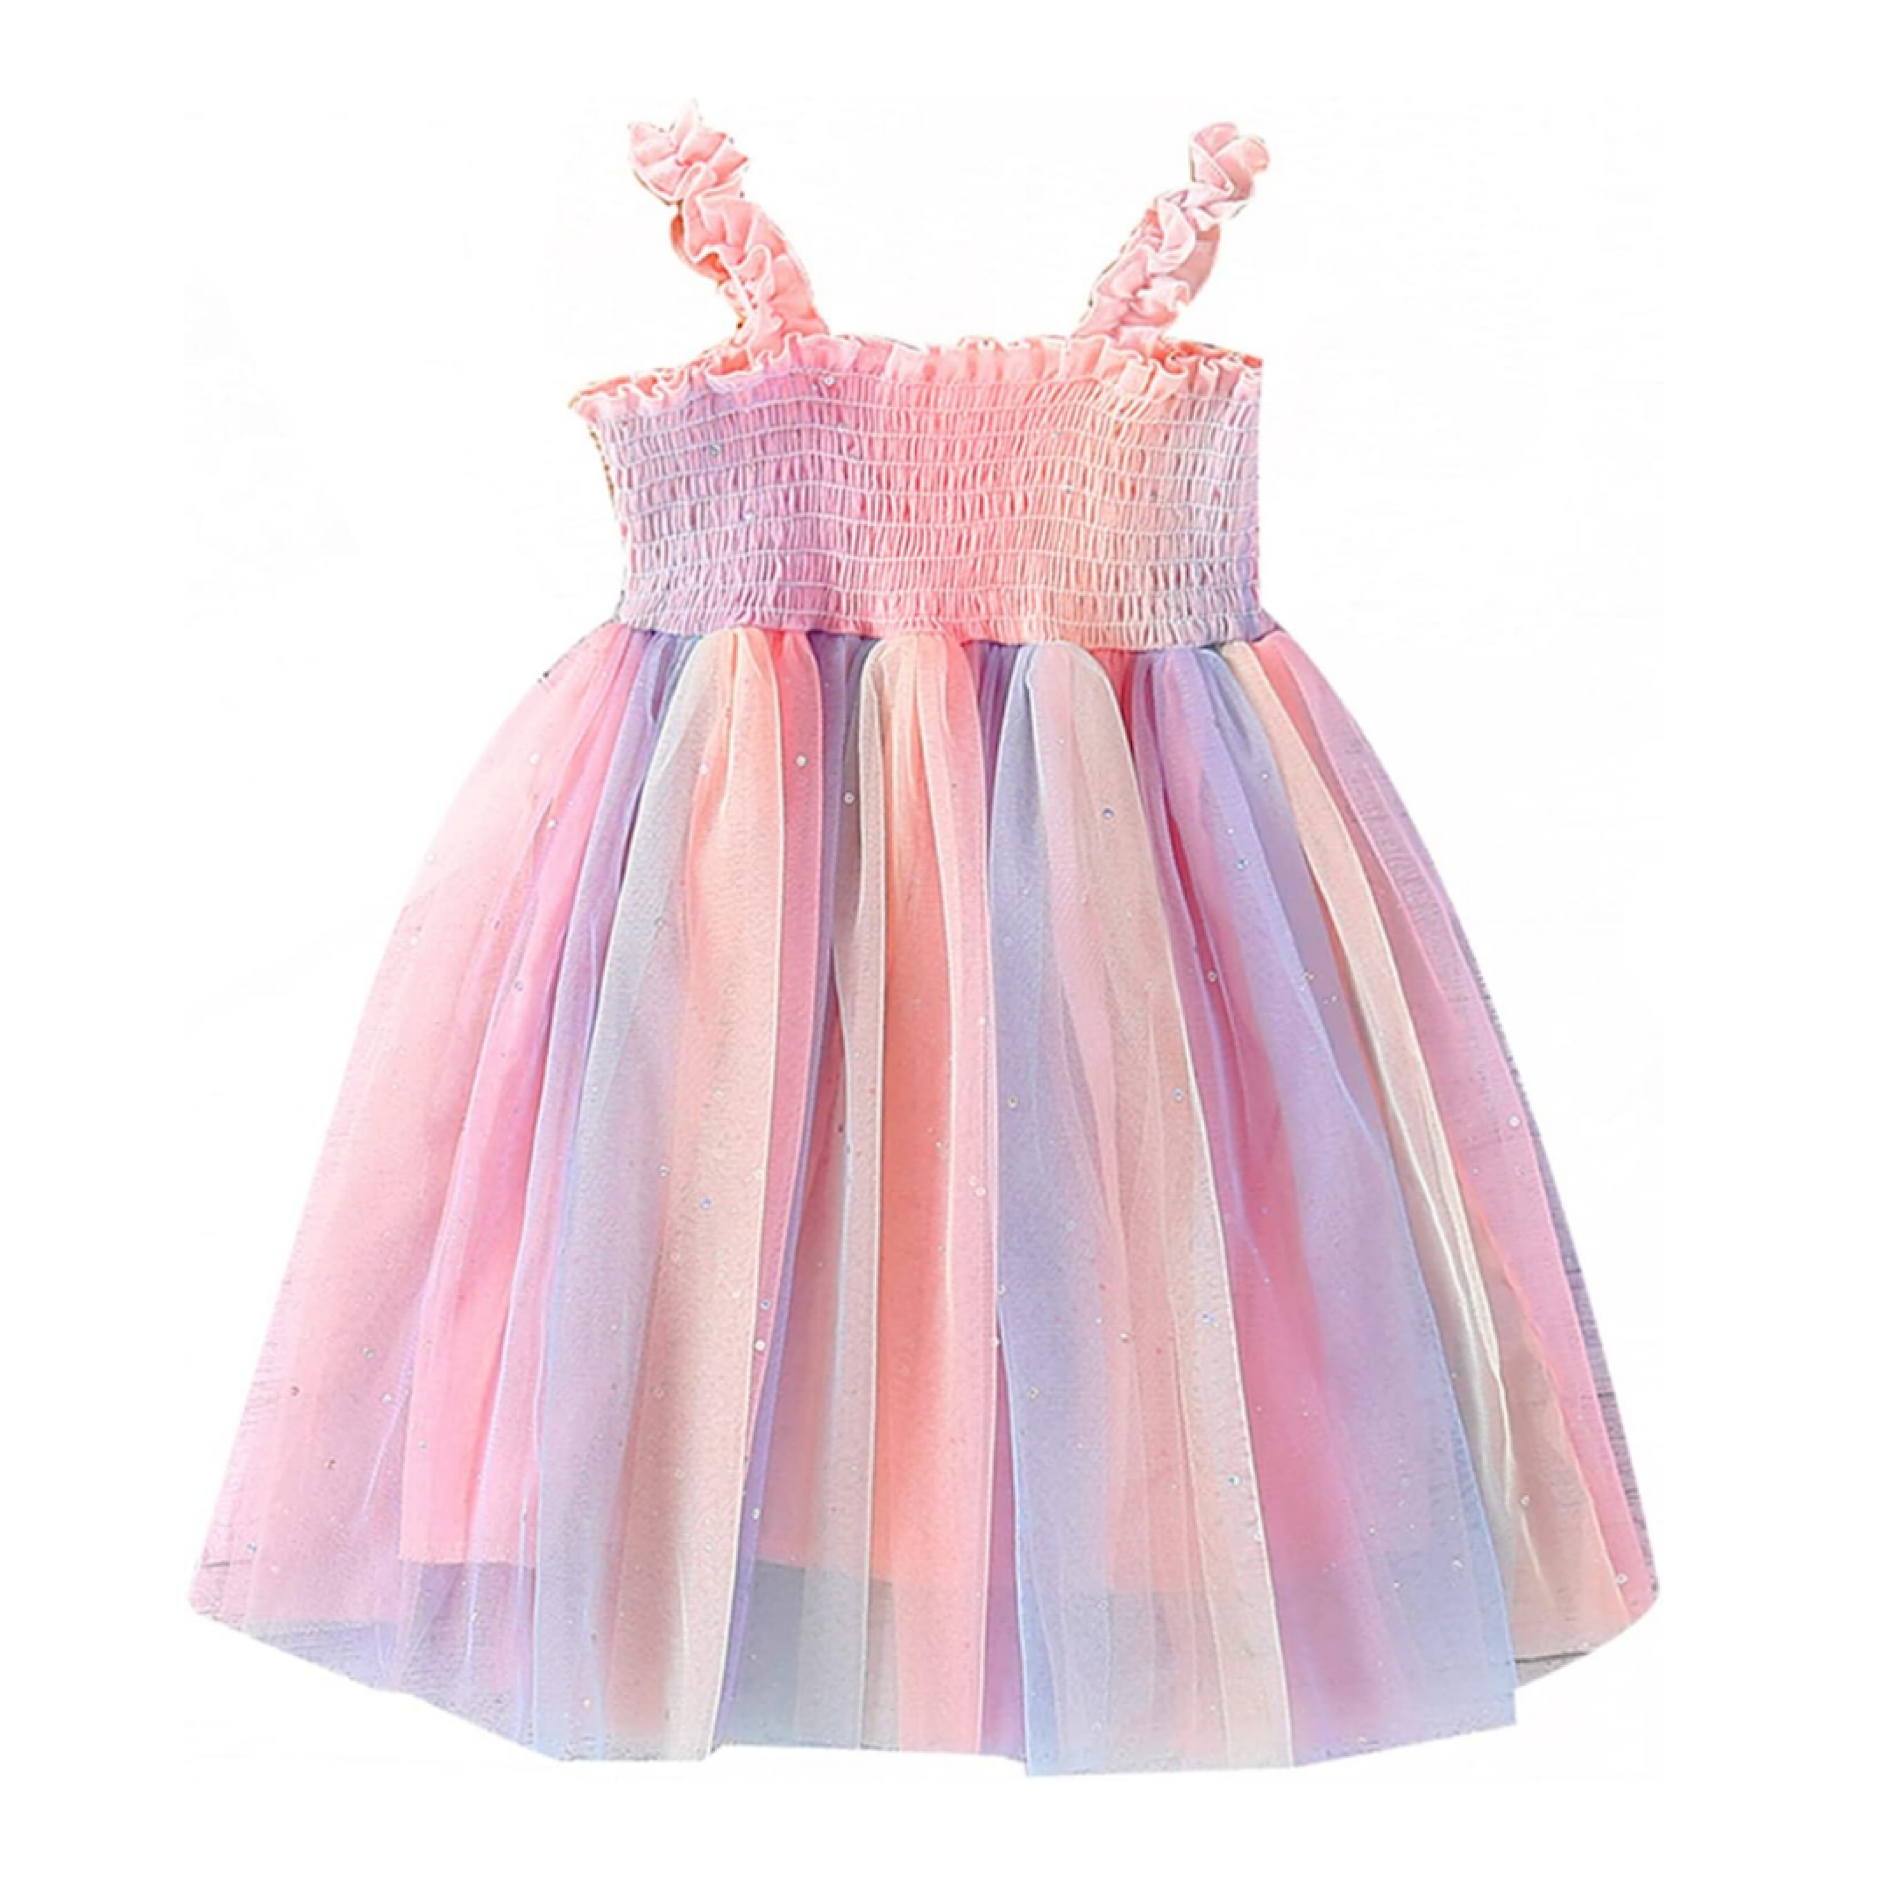 Toddler Girls Sparkly Tutu Pastel Rainbow Princess Dress, Color